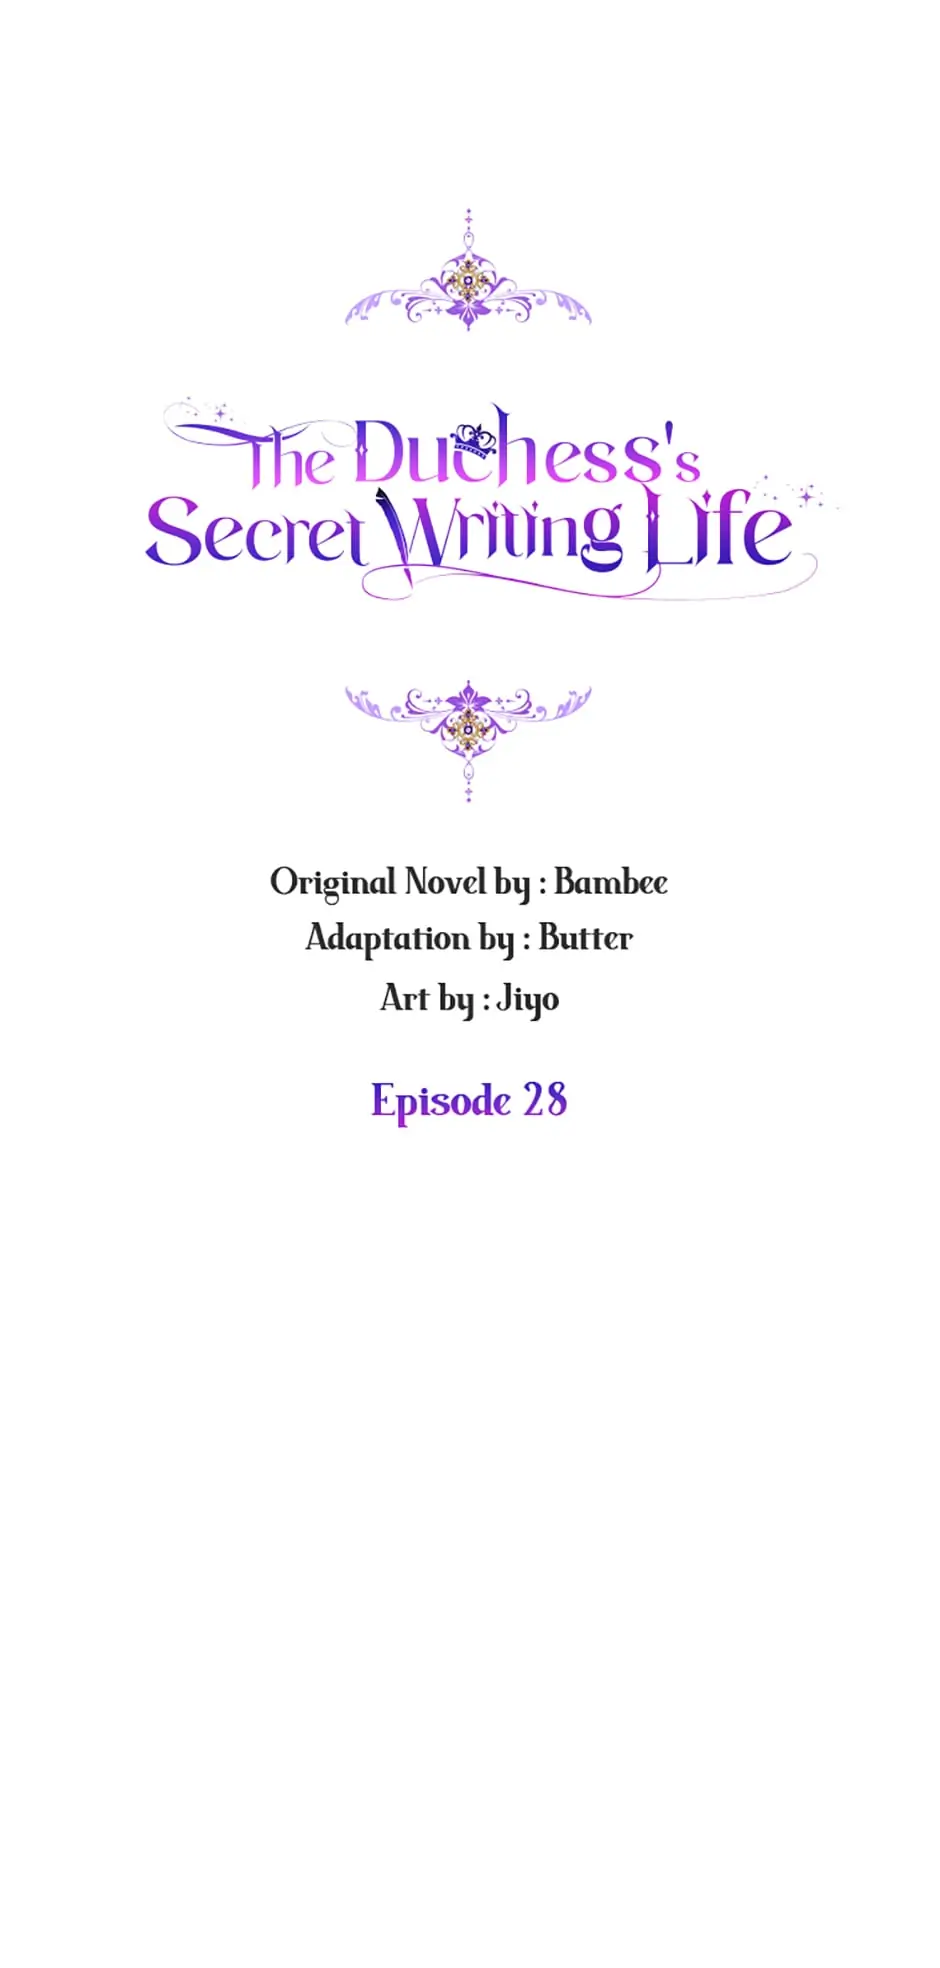 The Duchess’ Secret Writings chapter 28